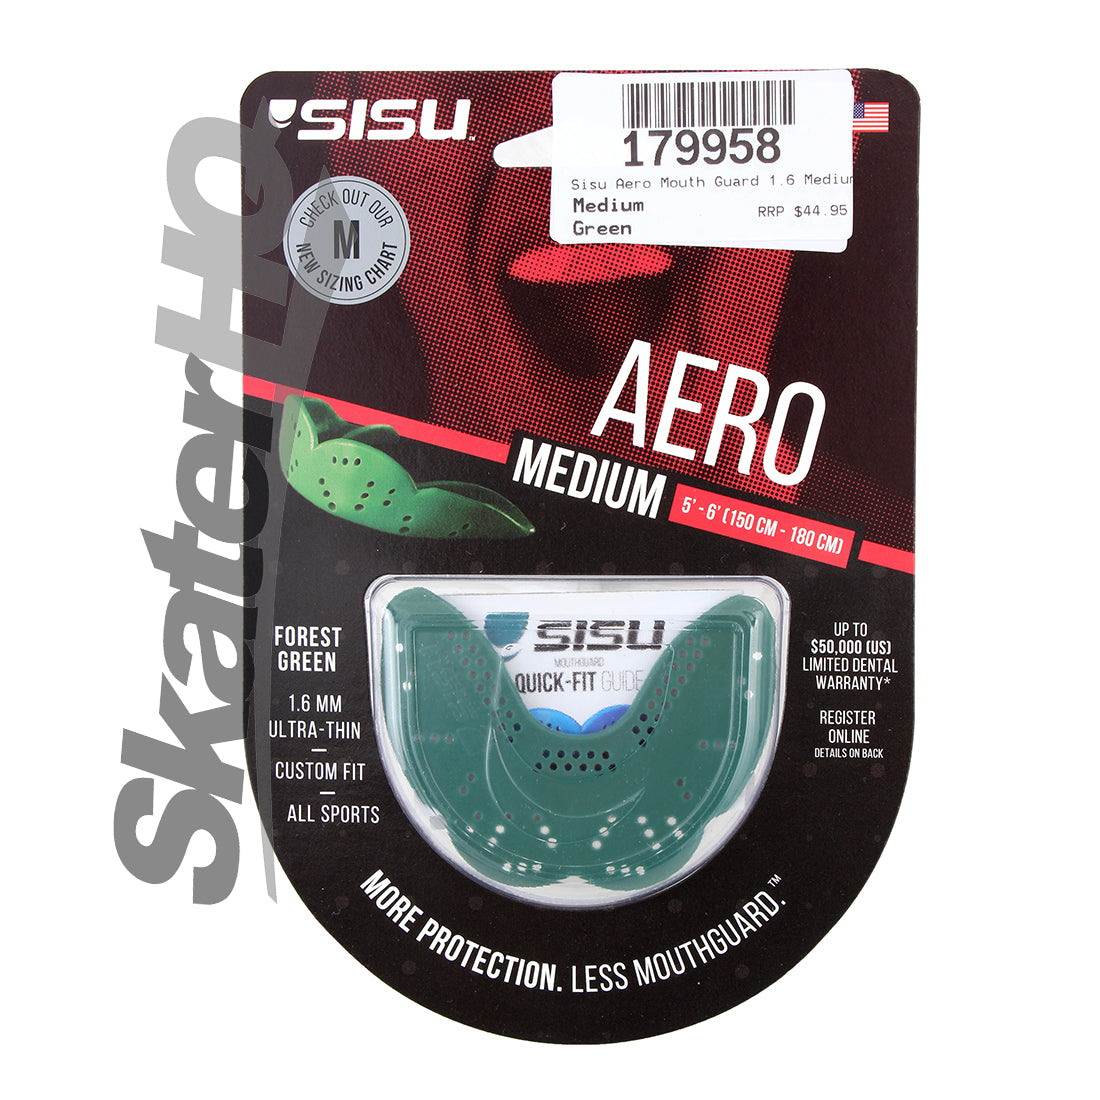 SISU AERO Mouthguard 1.6 Medium - Forest Green Protective Mouthguards